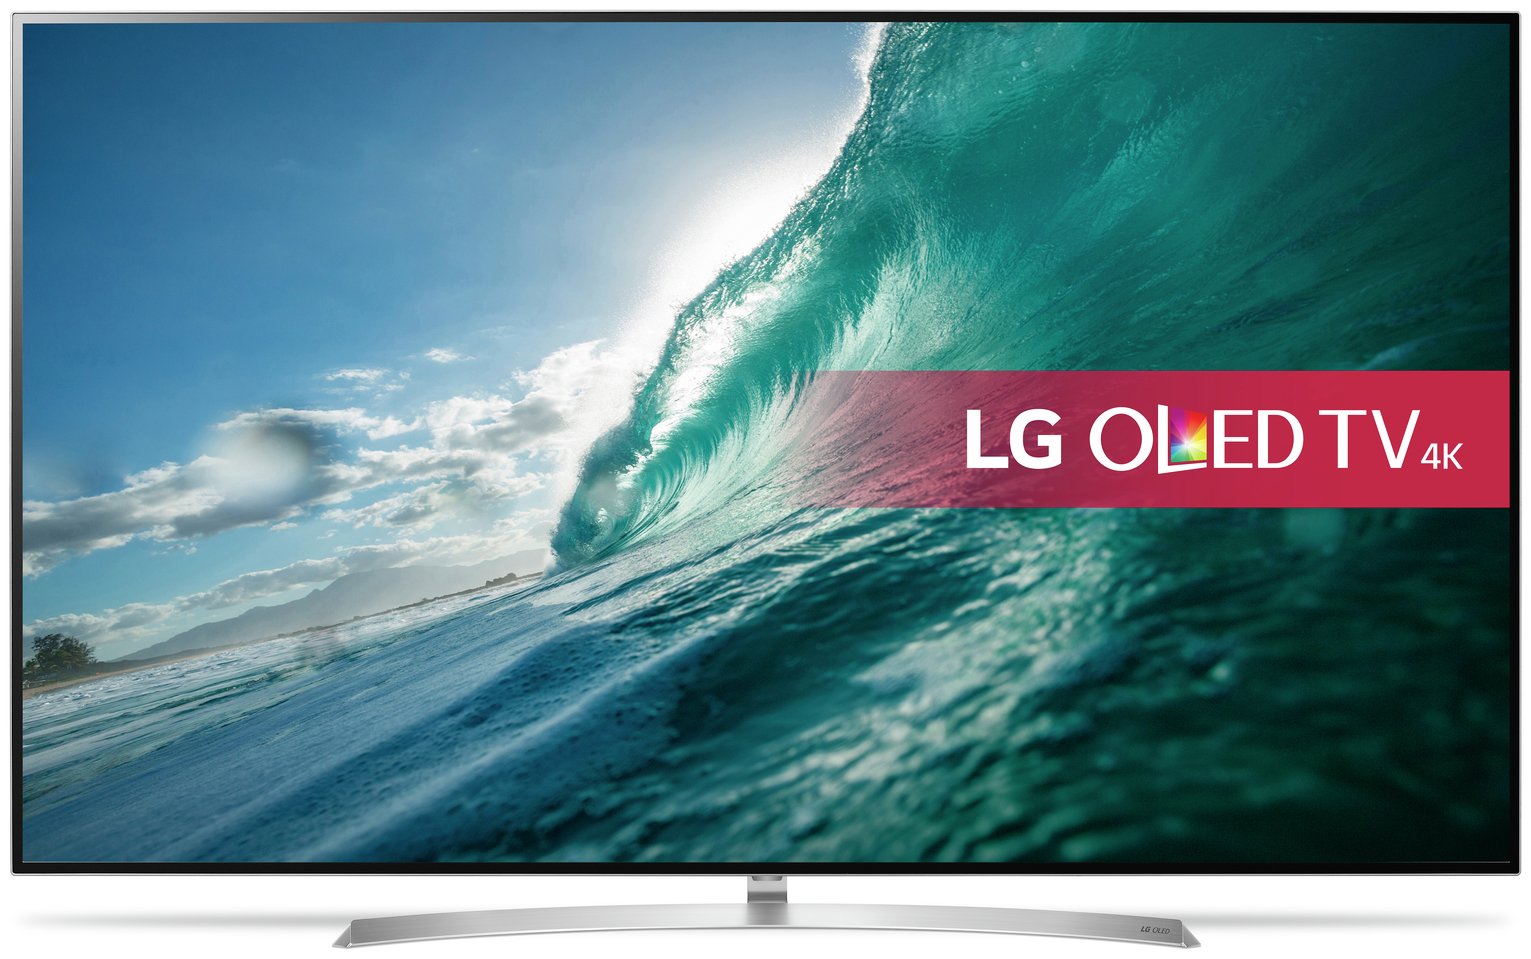 LG OLED65B7V 65 Inch Smart OLED 4K Ultra HD TV with HDR